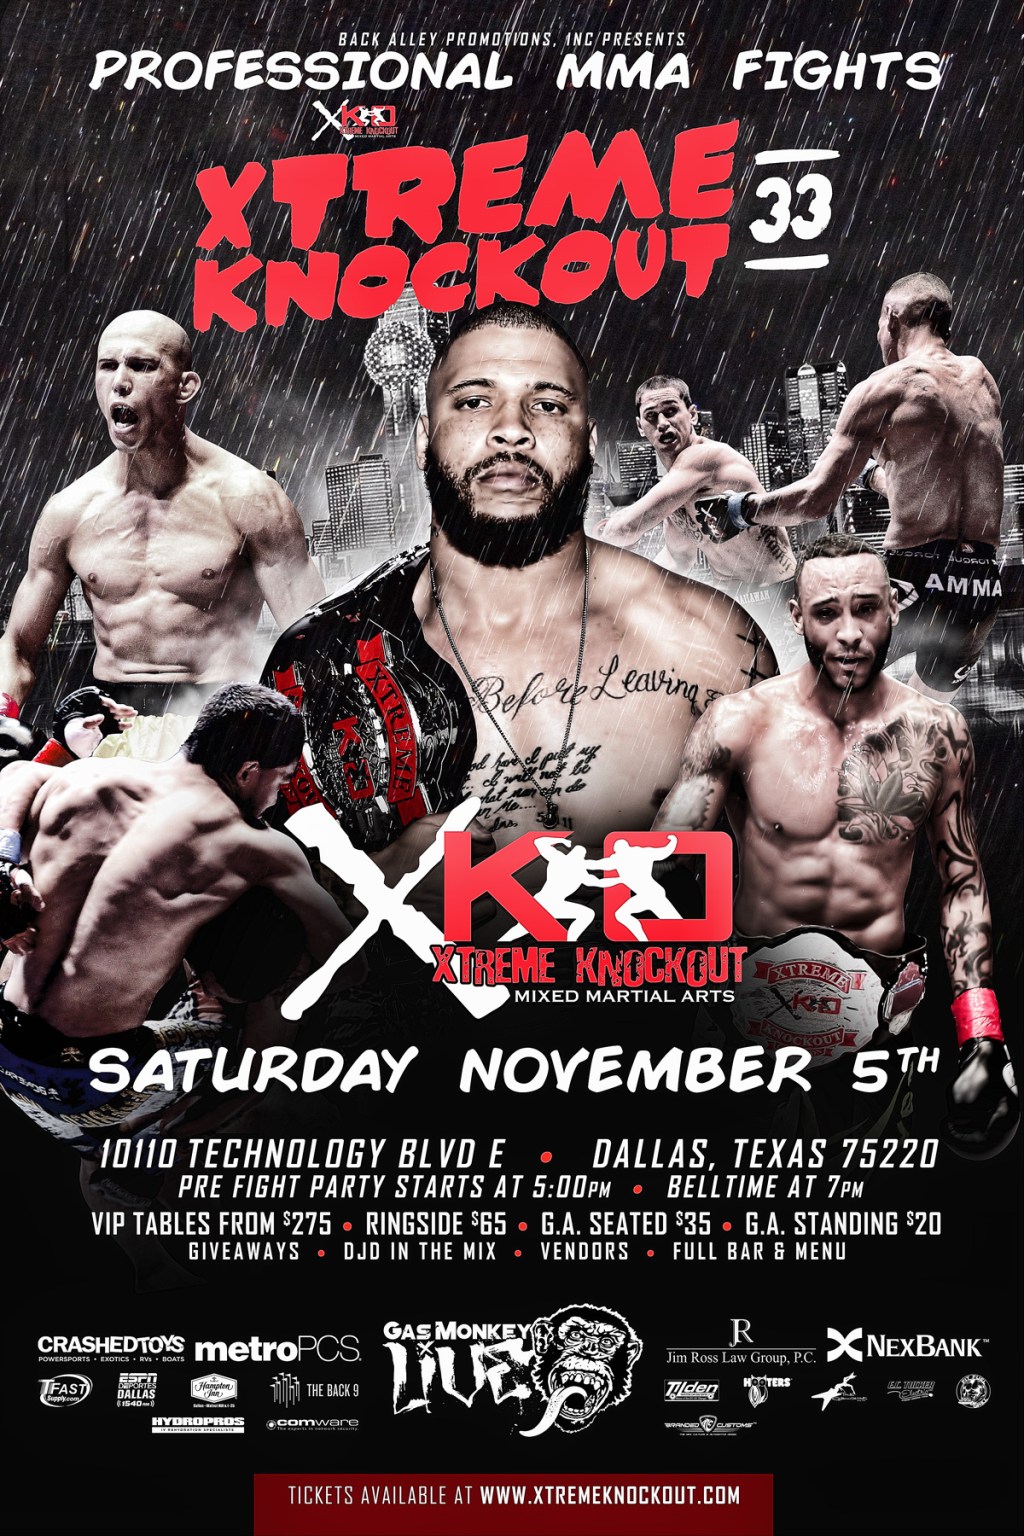 TXMMA – Texas Mixed Martial Arts – Texas